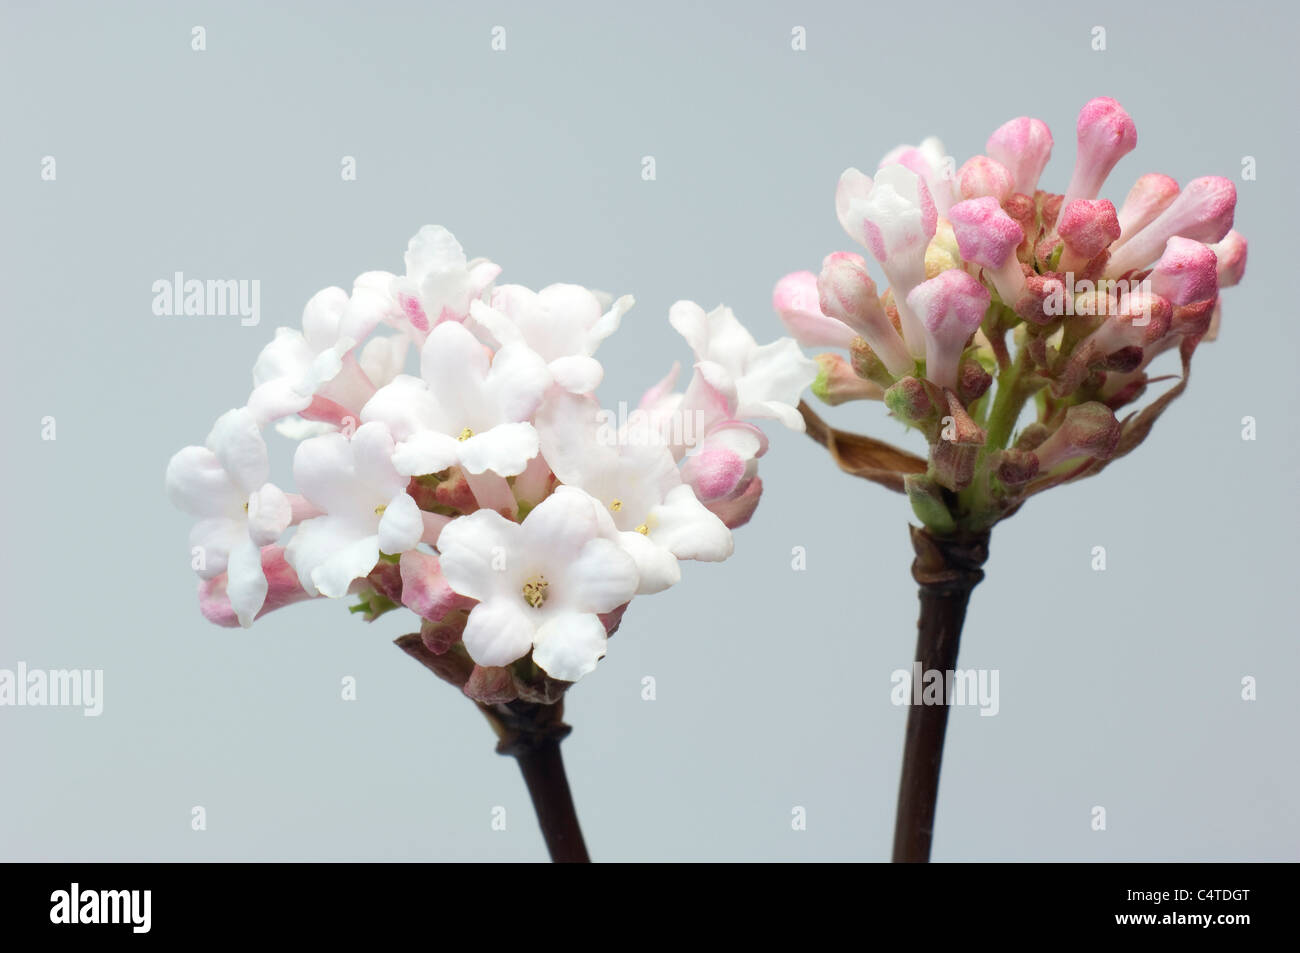 Goose (Viburnum x bodnantense Dawn), flowering twigs. Studio picture against a white background. Stock Photo